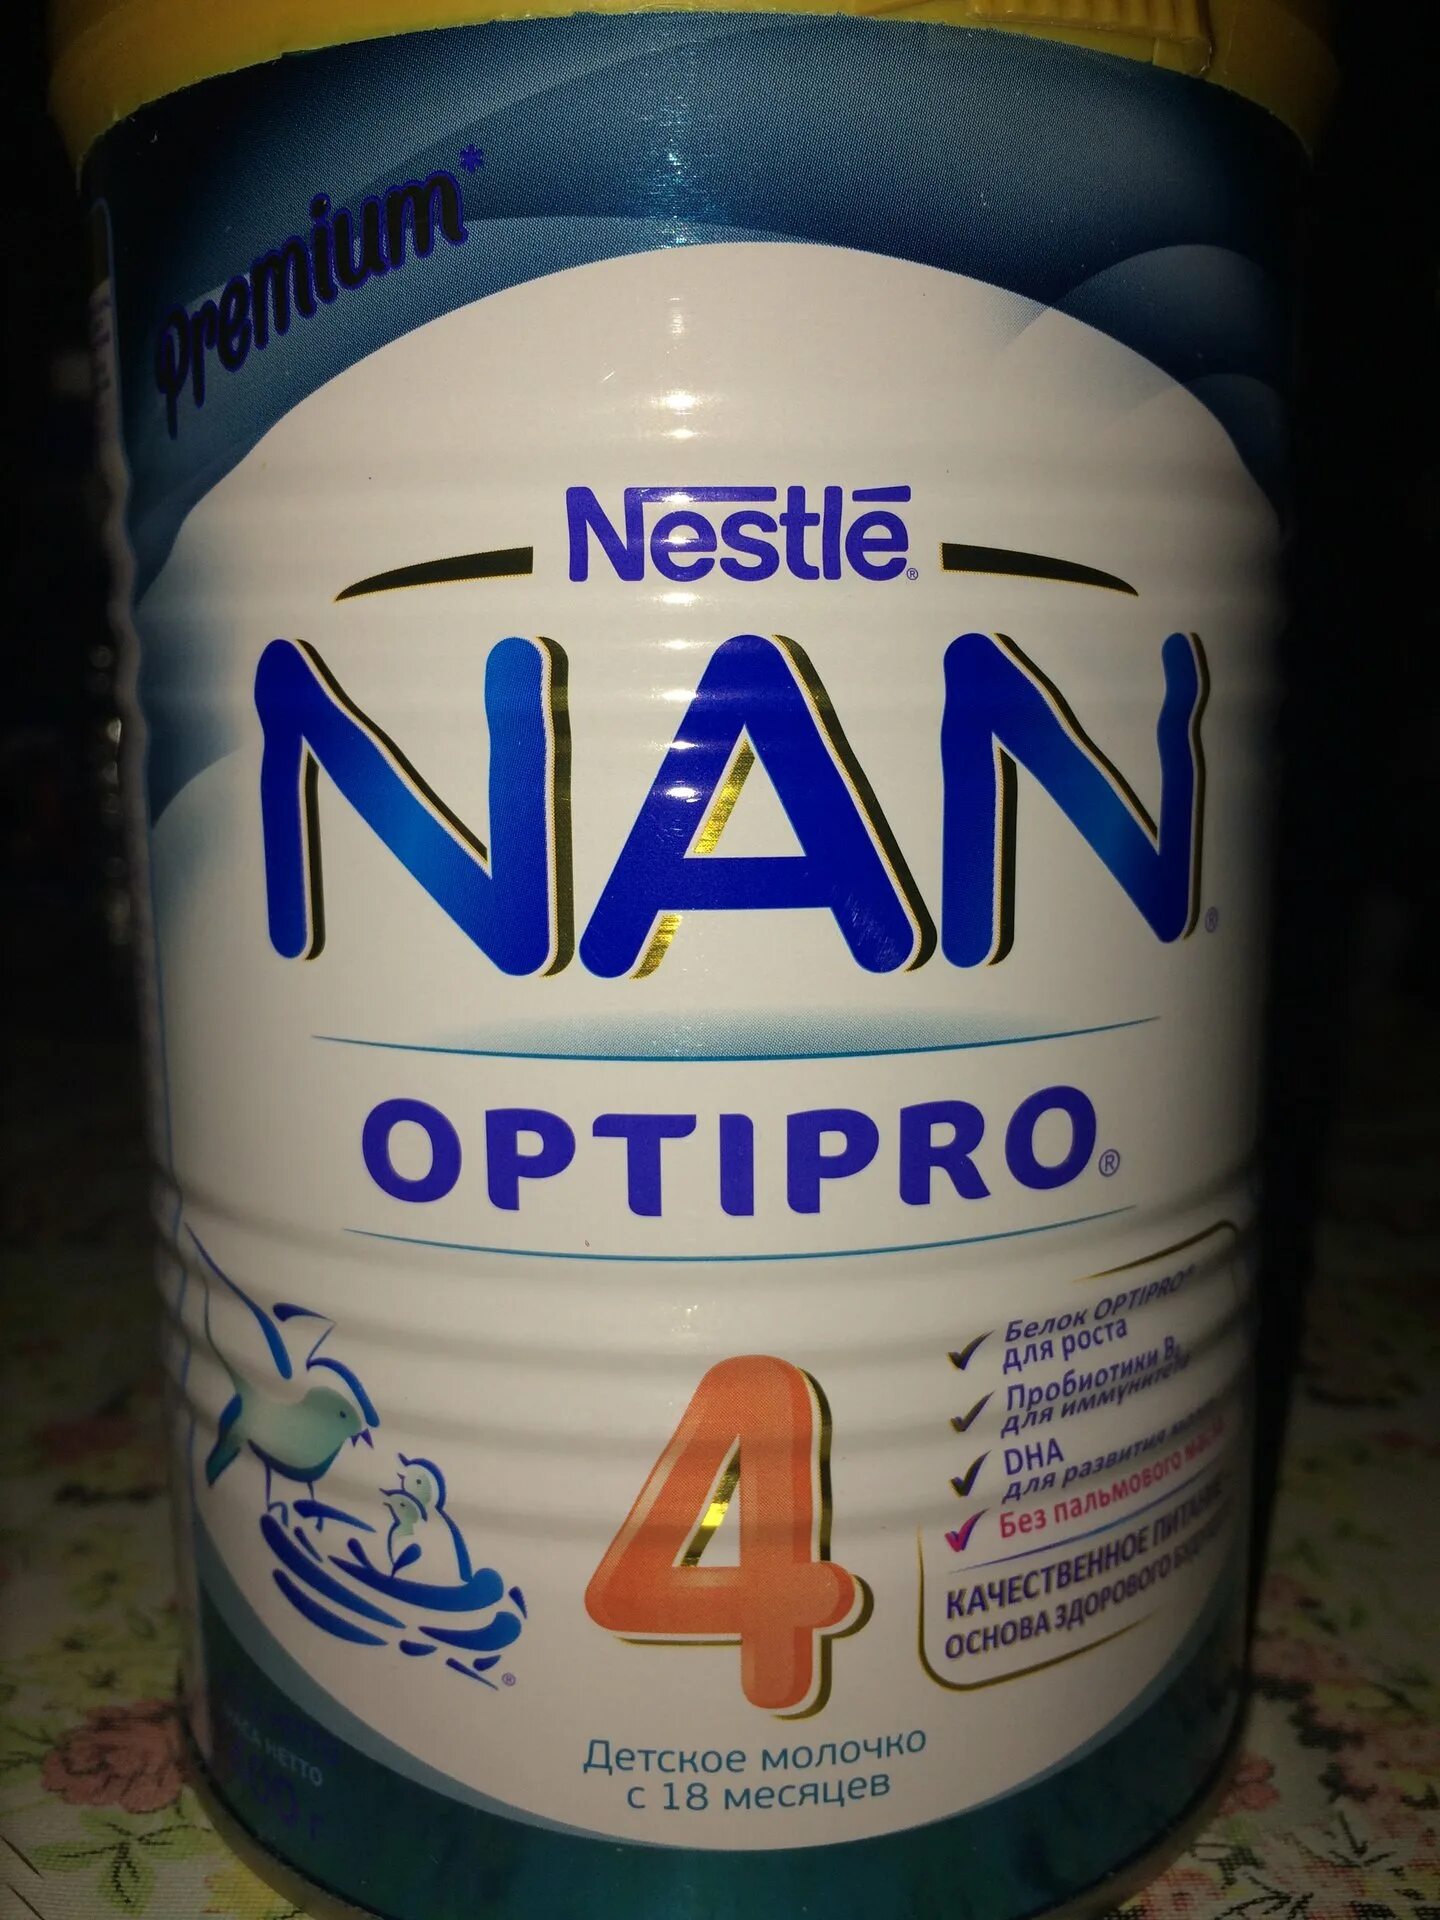 Нан 4. Nestle nan Optipro 4. Nan 1 Optipro 4 месяца. Детское молочко нан Нестле. Смесь nan с 4 месяцев.